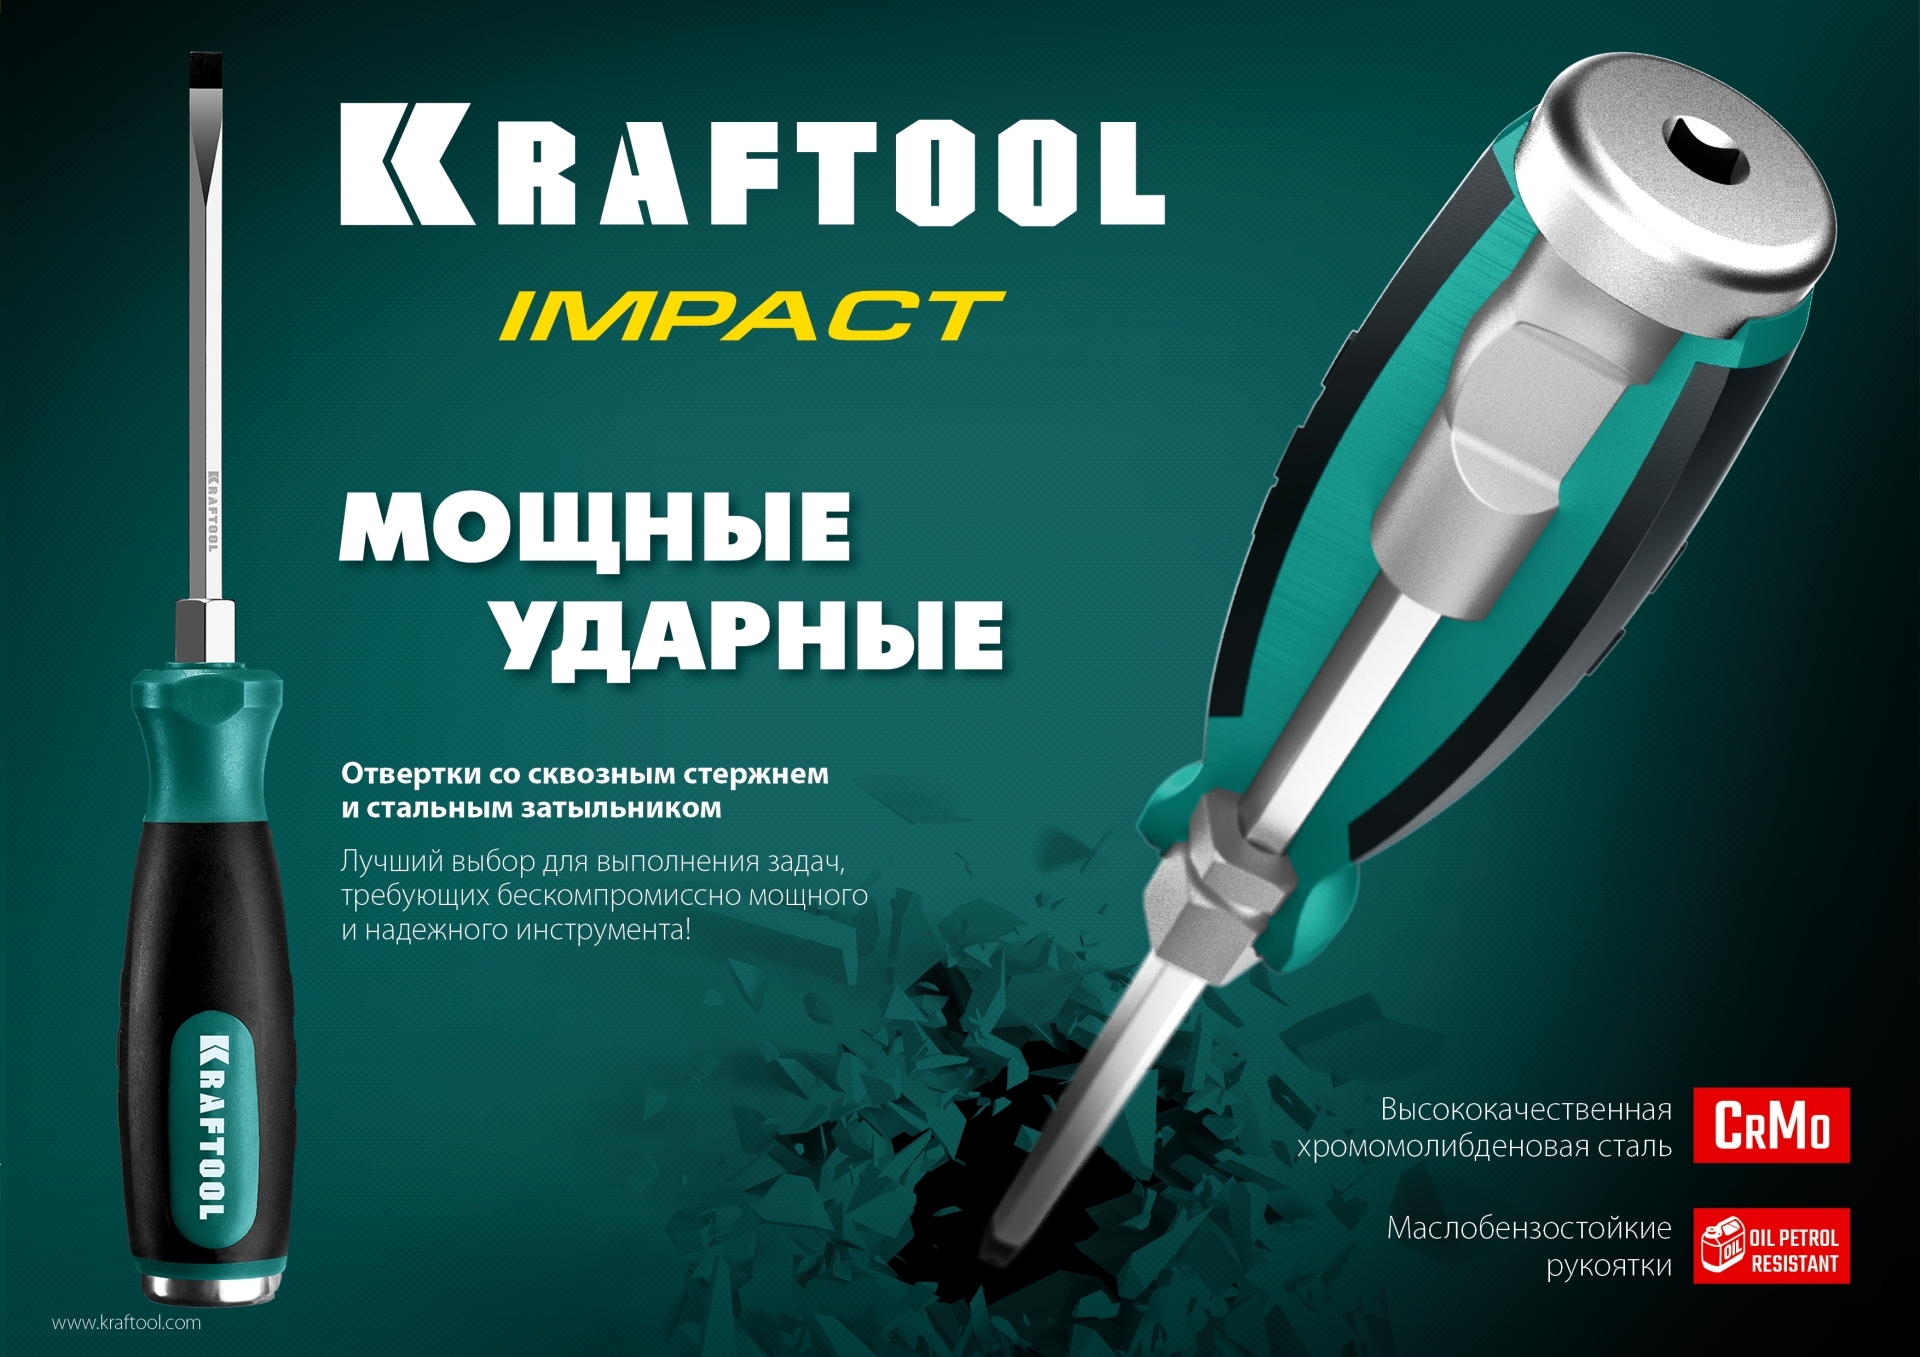 KRAFTOOL Impact SL 6, ударная отвертка (250033-6)